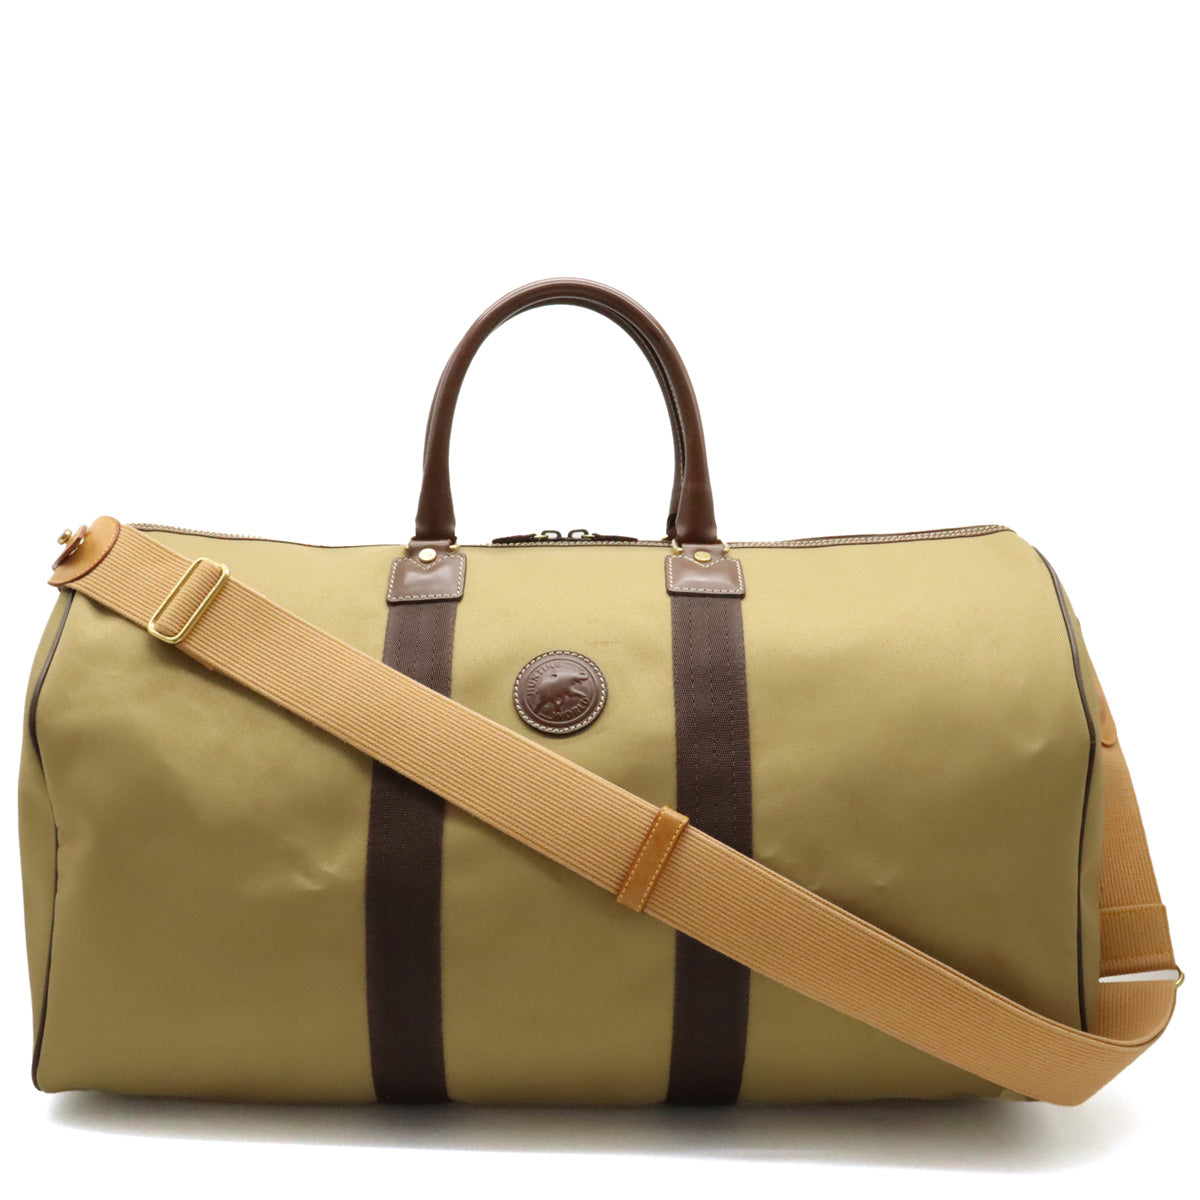 HUNTING WORLD Hunting World Sapphire Boston Bag Travel Bag 2WAY Shoulder Bag Canvas Leather Karki Brown